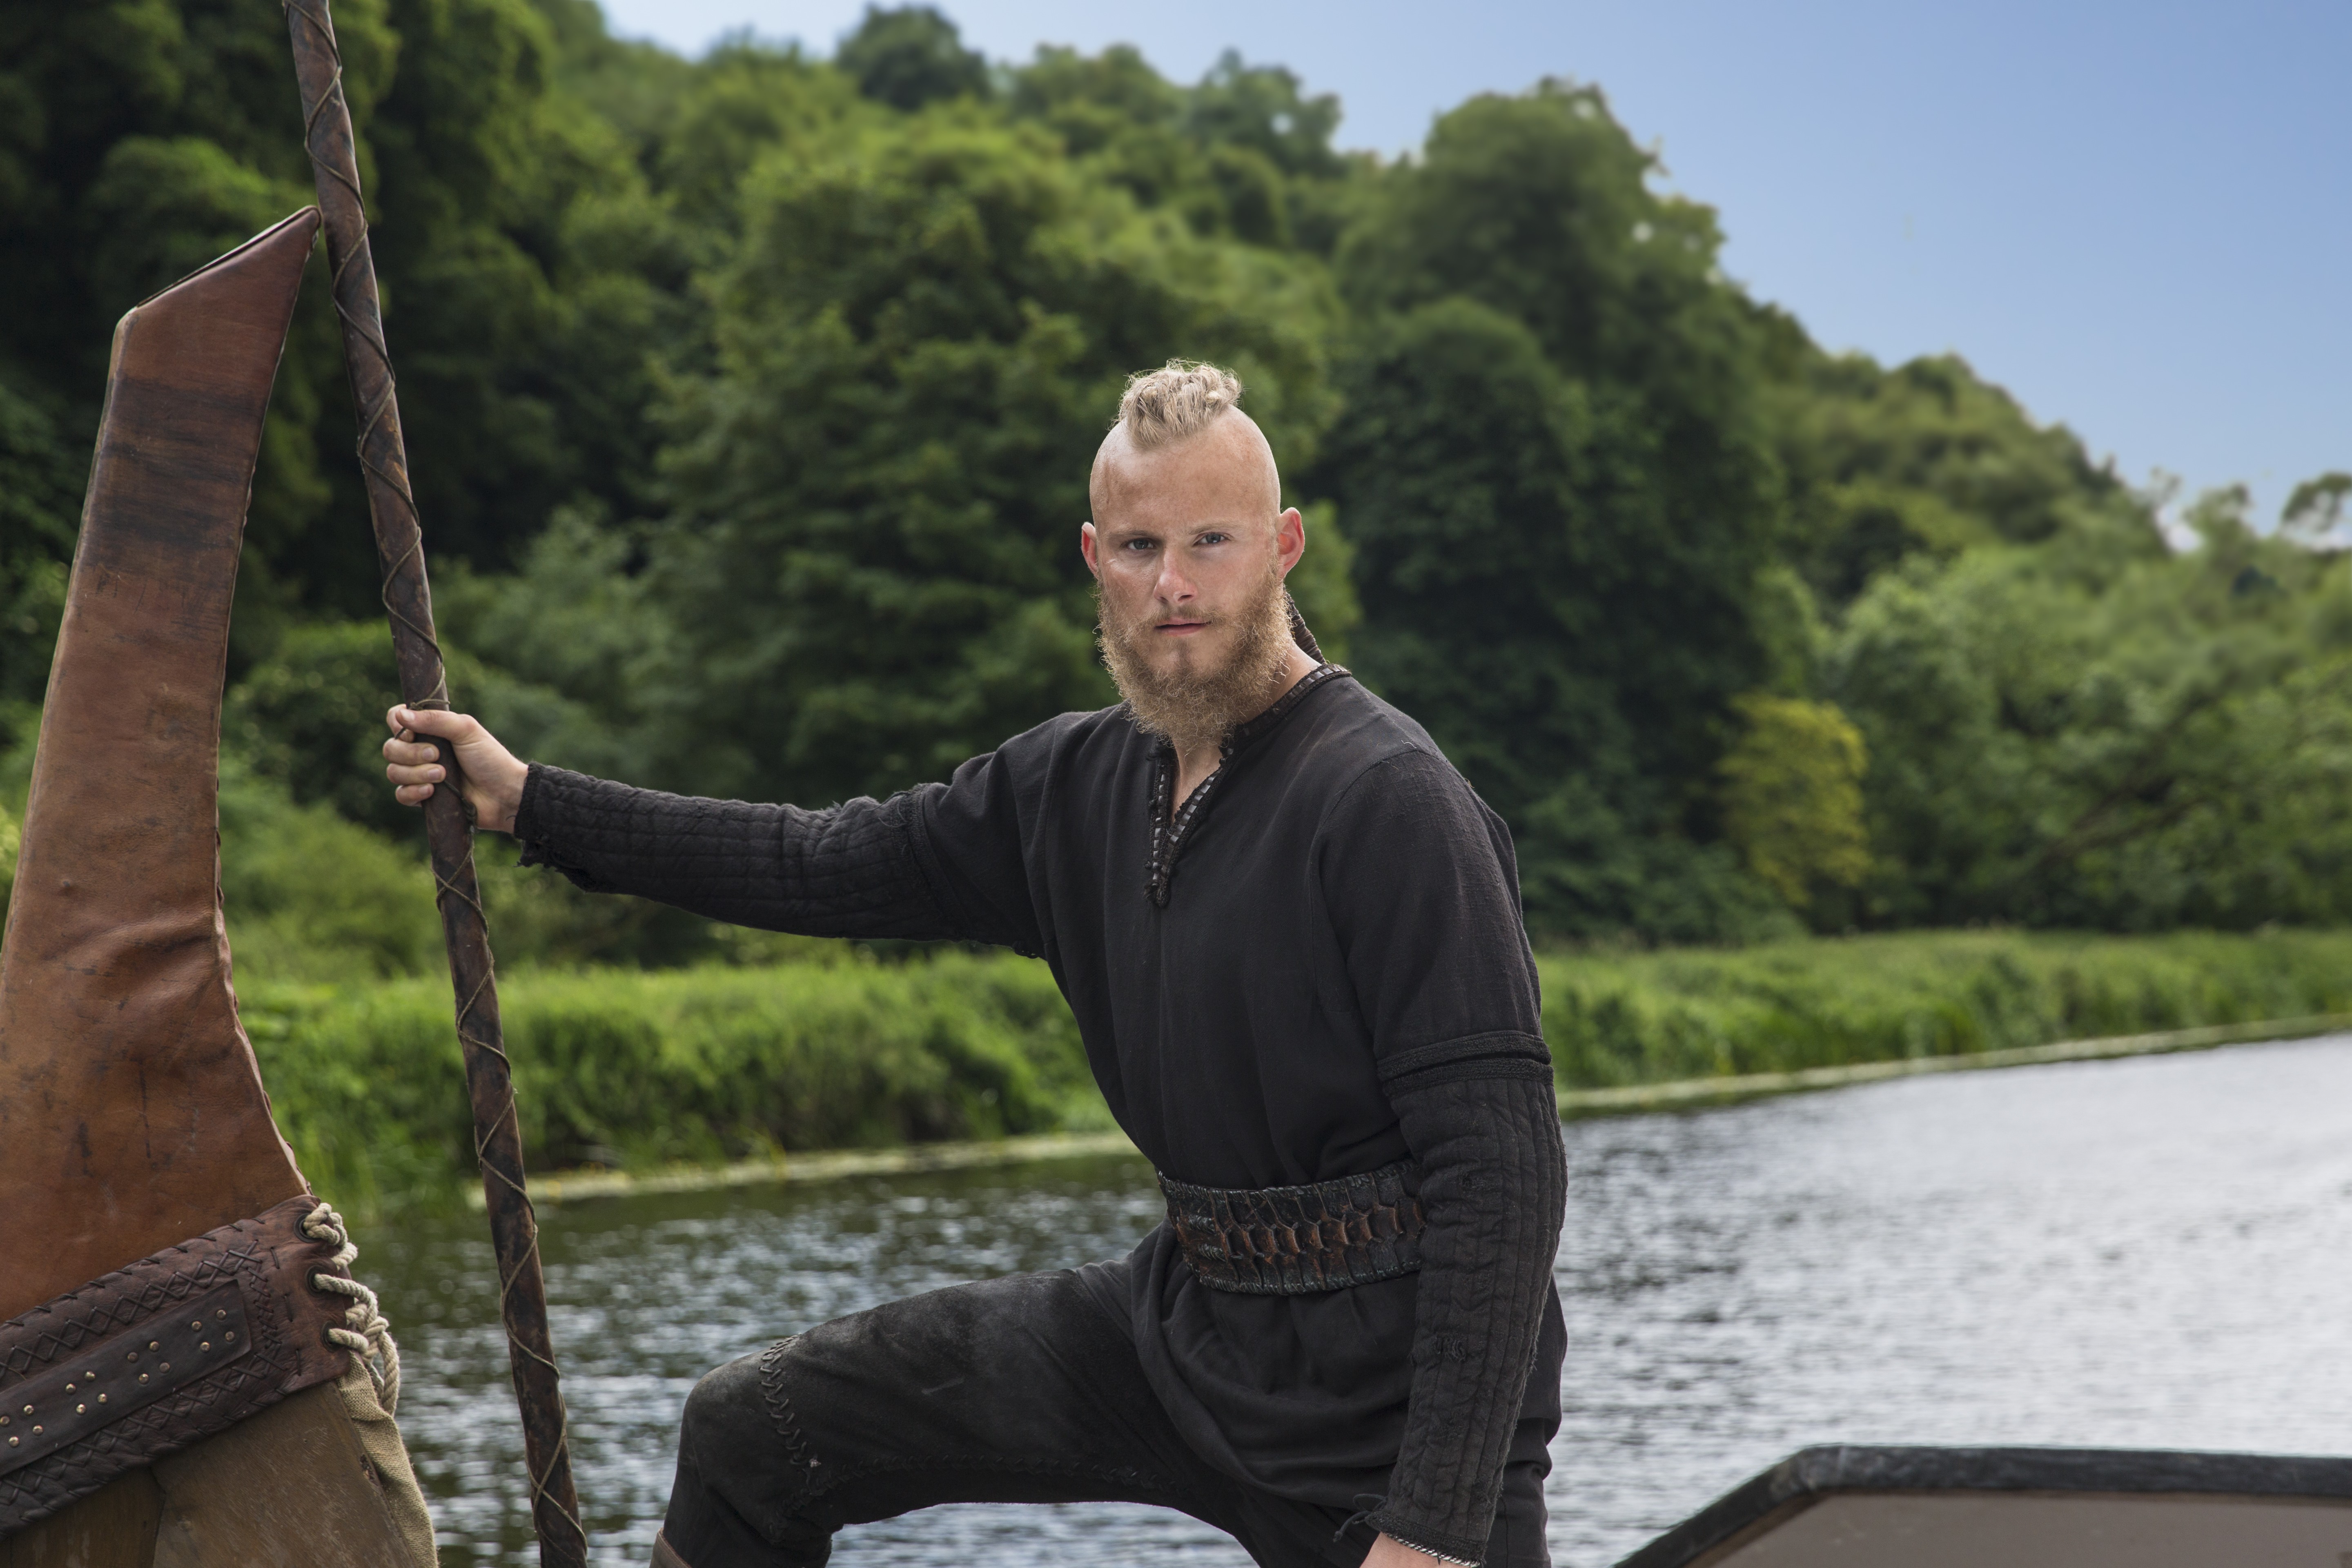 Baixar papel de parede para celular de Programa De Tv, Vikings gratuito.